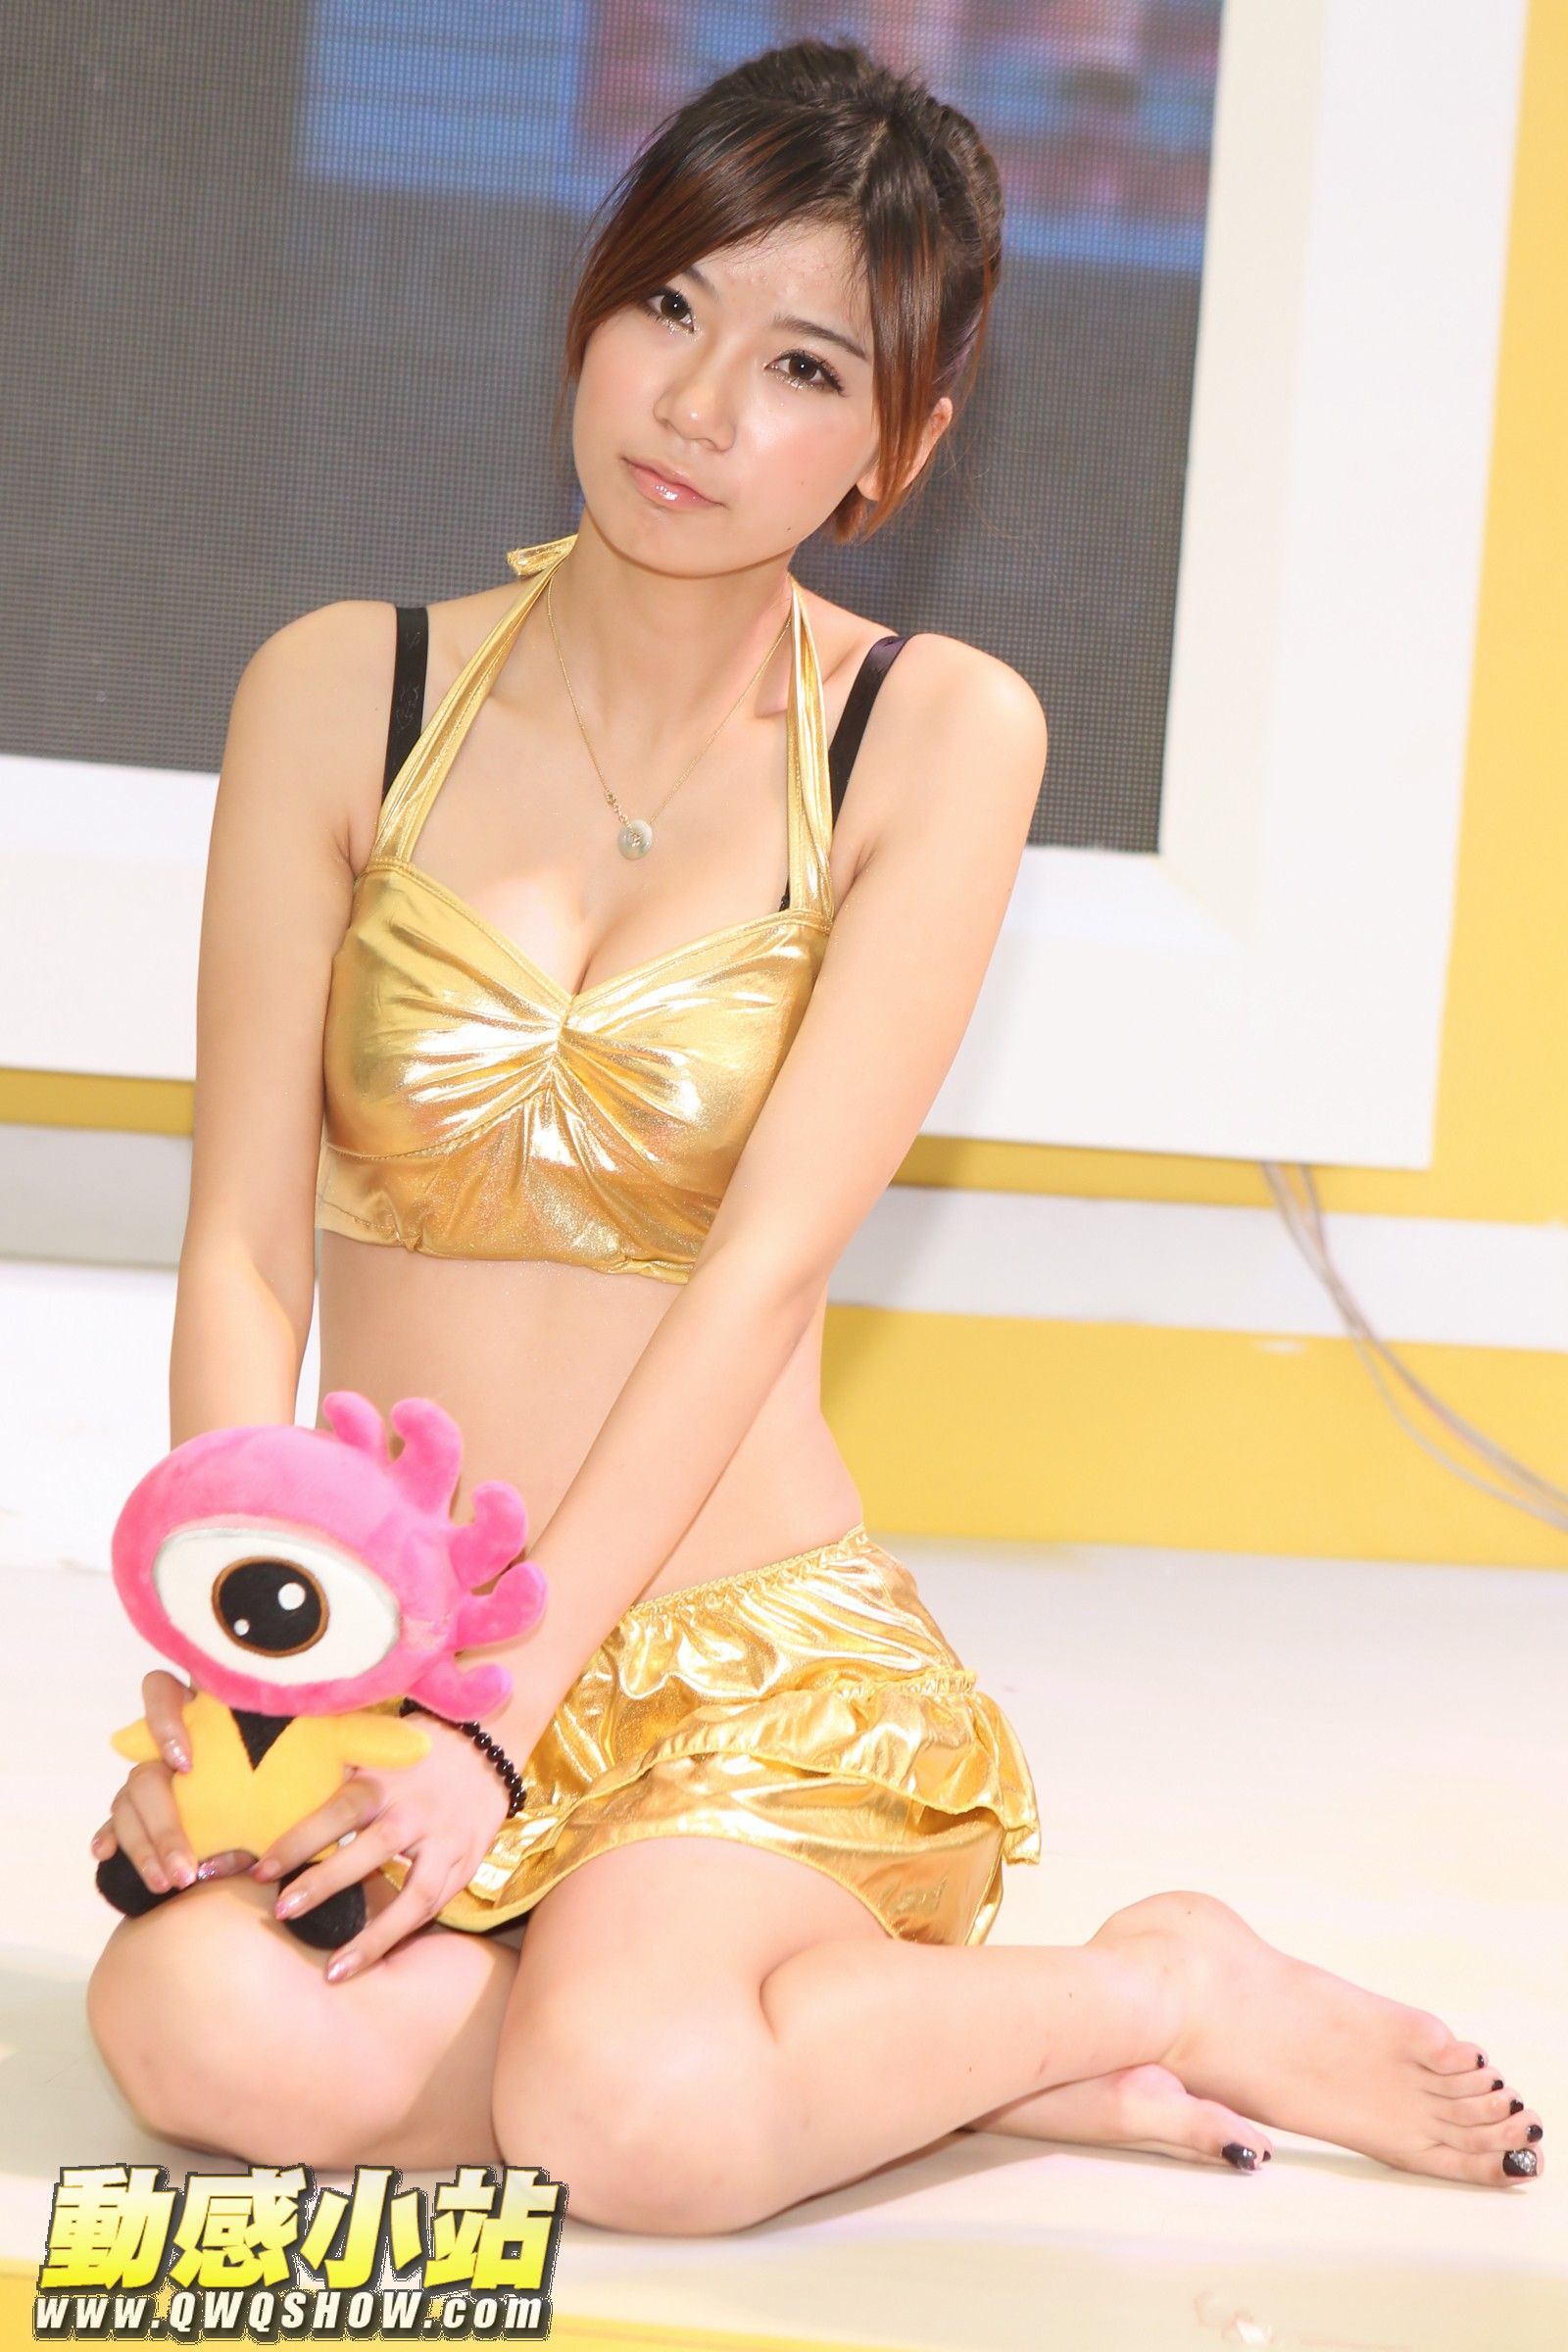 Hot girls dance video game show pptv Sina Weibo model dynamic star beauty model set